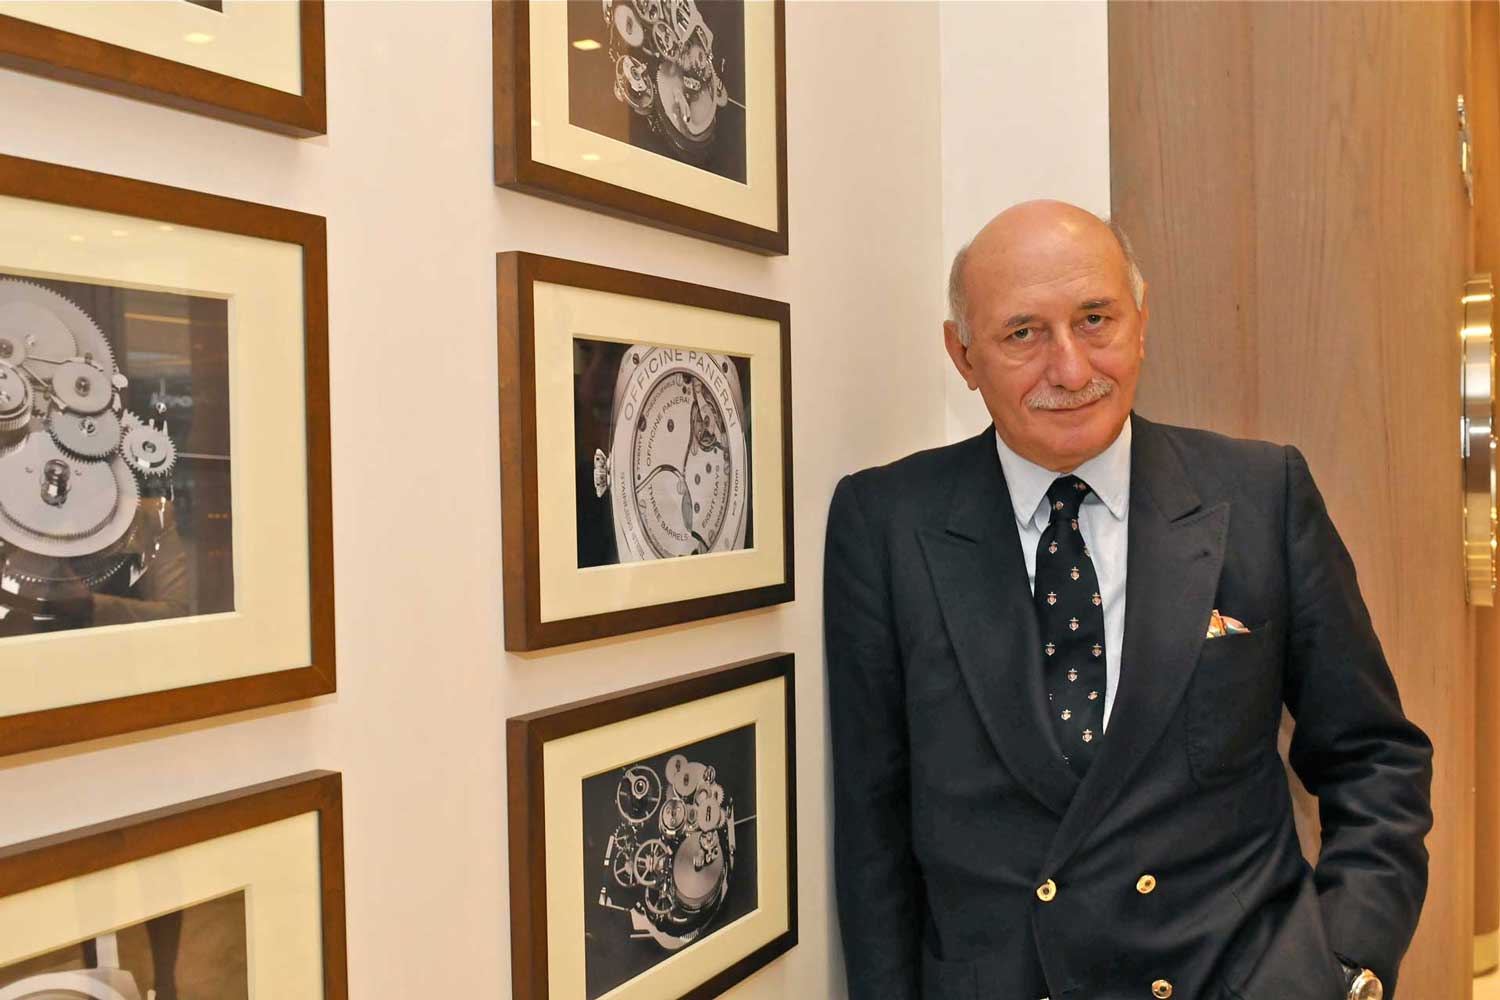 Angelo Bonati, former CEO, Panerai